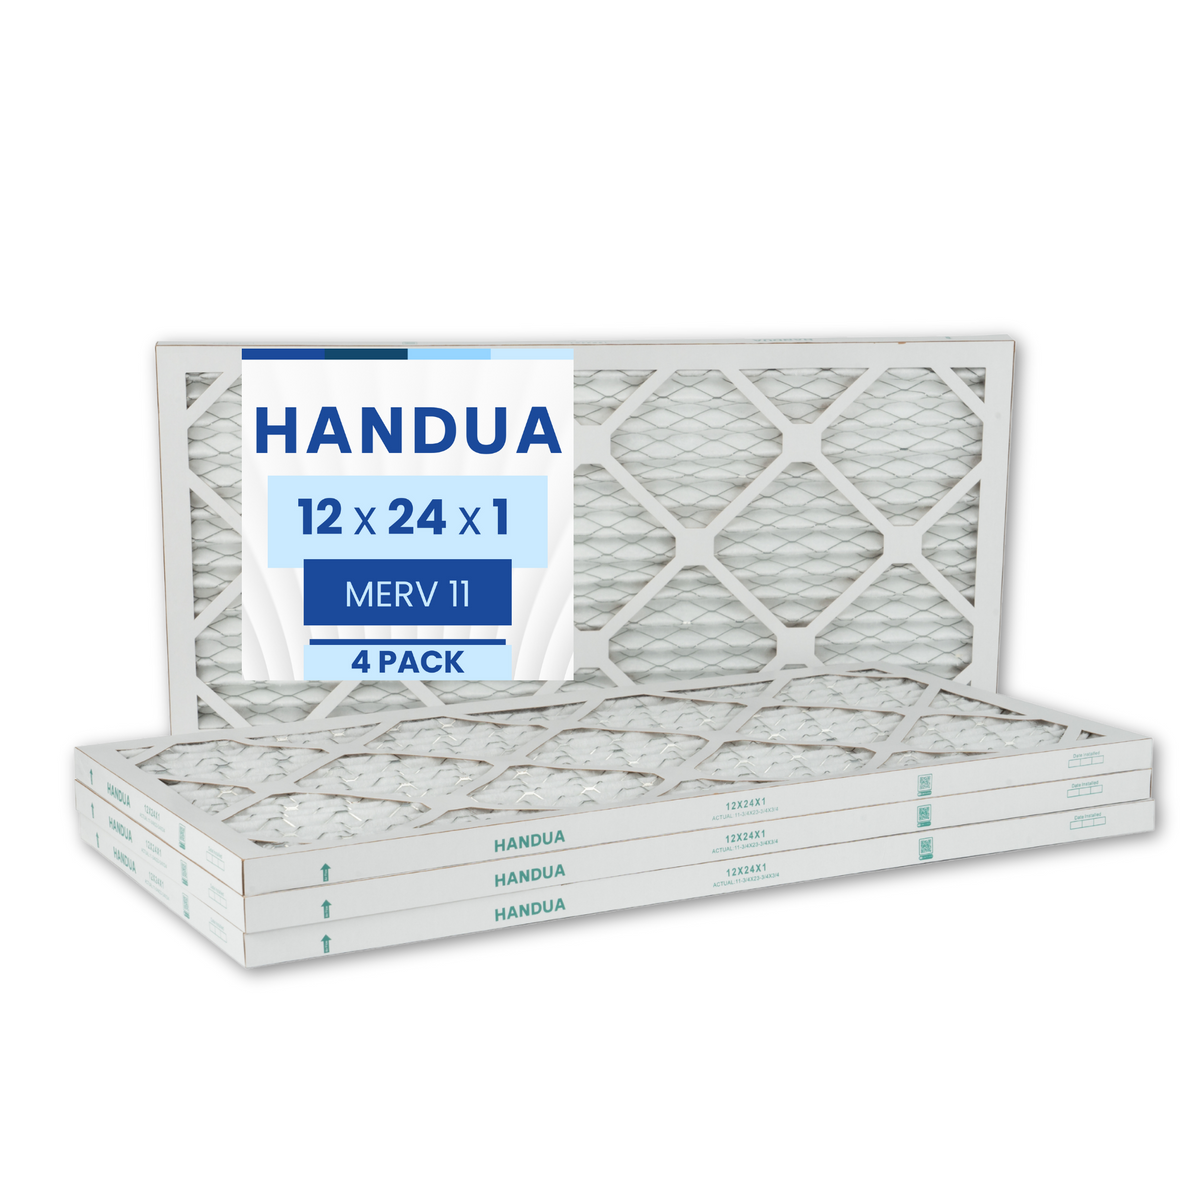 Handua 12x24x1 Air Filter MERV 11 Allergen Control, Plated Furnace AC Air Replacement Filter, 4 Pack (Actual Size: 11.75" x 23.75" x 0.75")